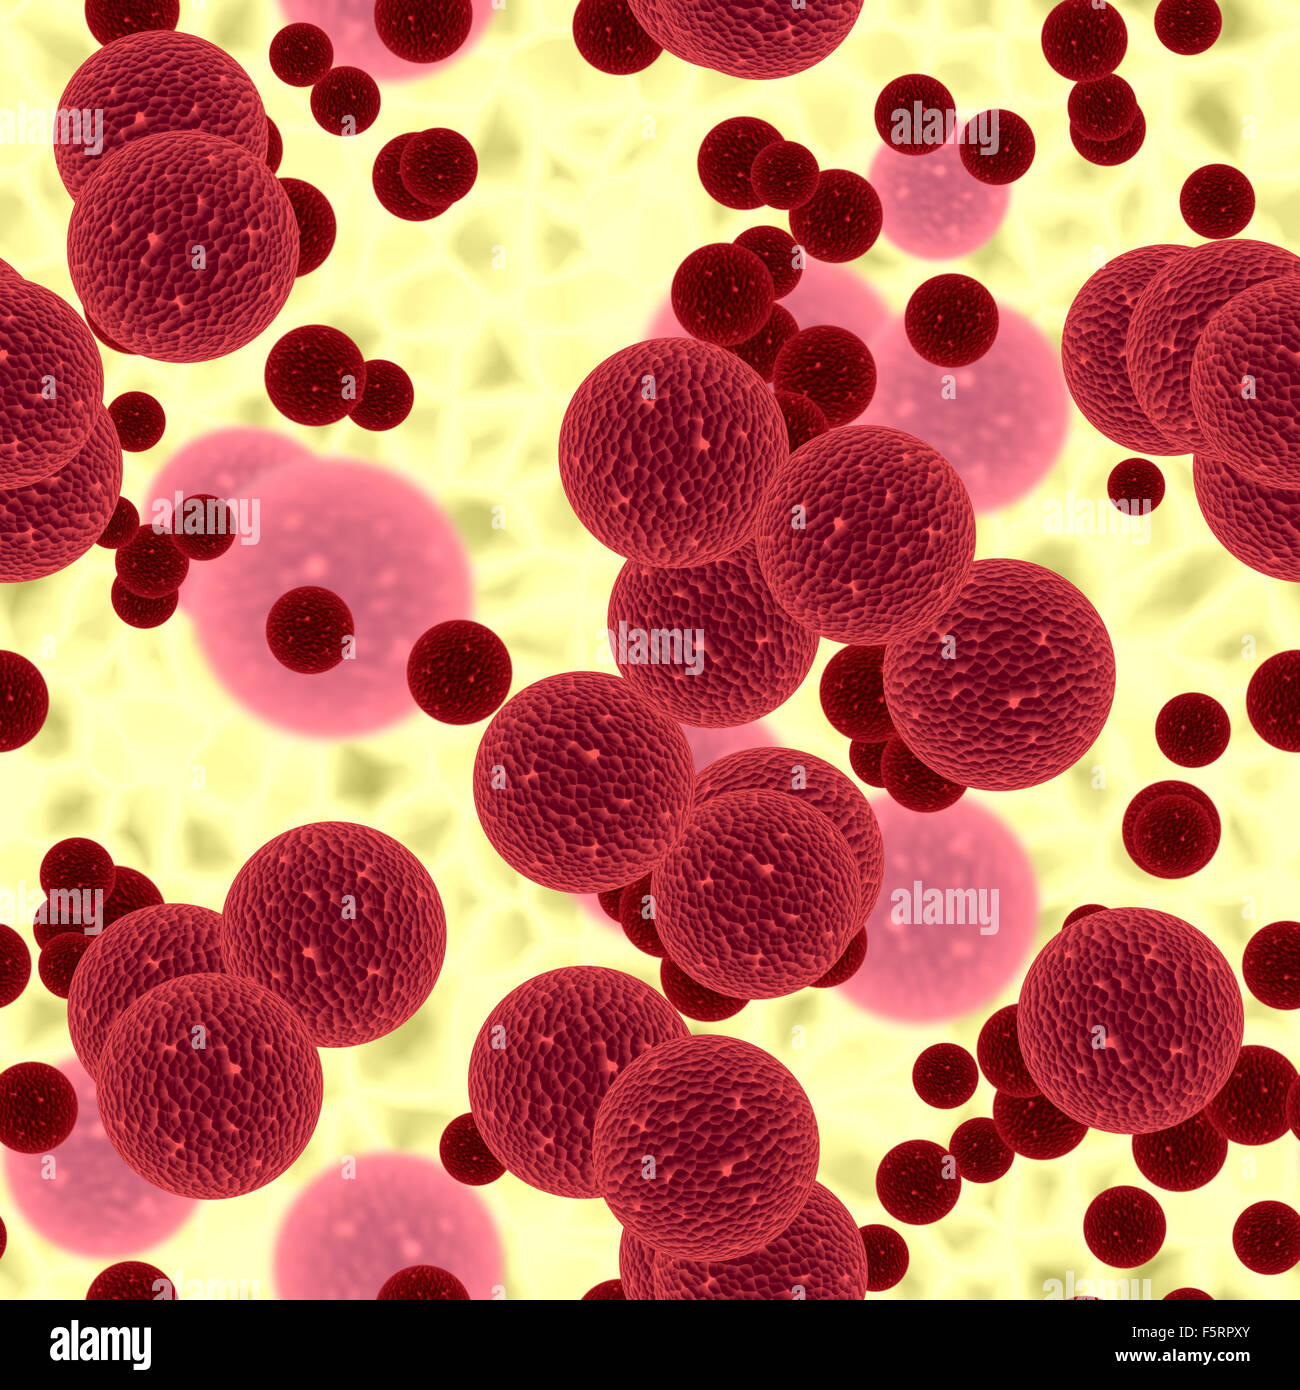 Seamless background de cellules rouges dans les microscopes, abstract illustration. Banque D'Images